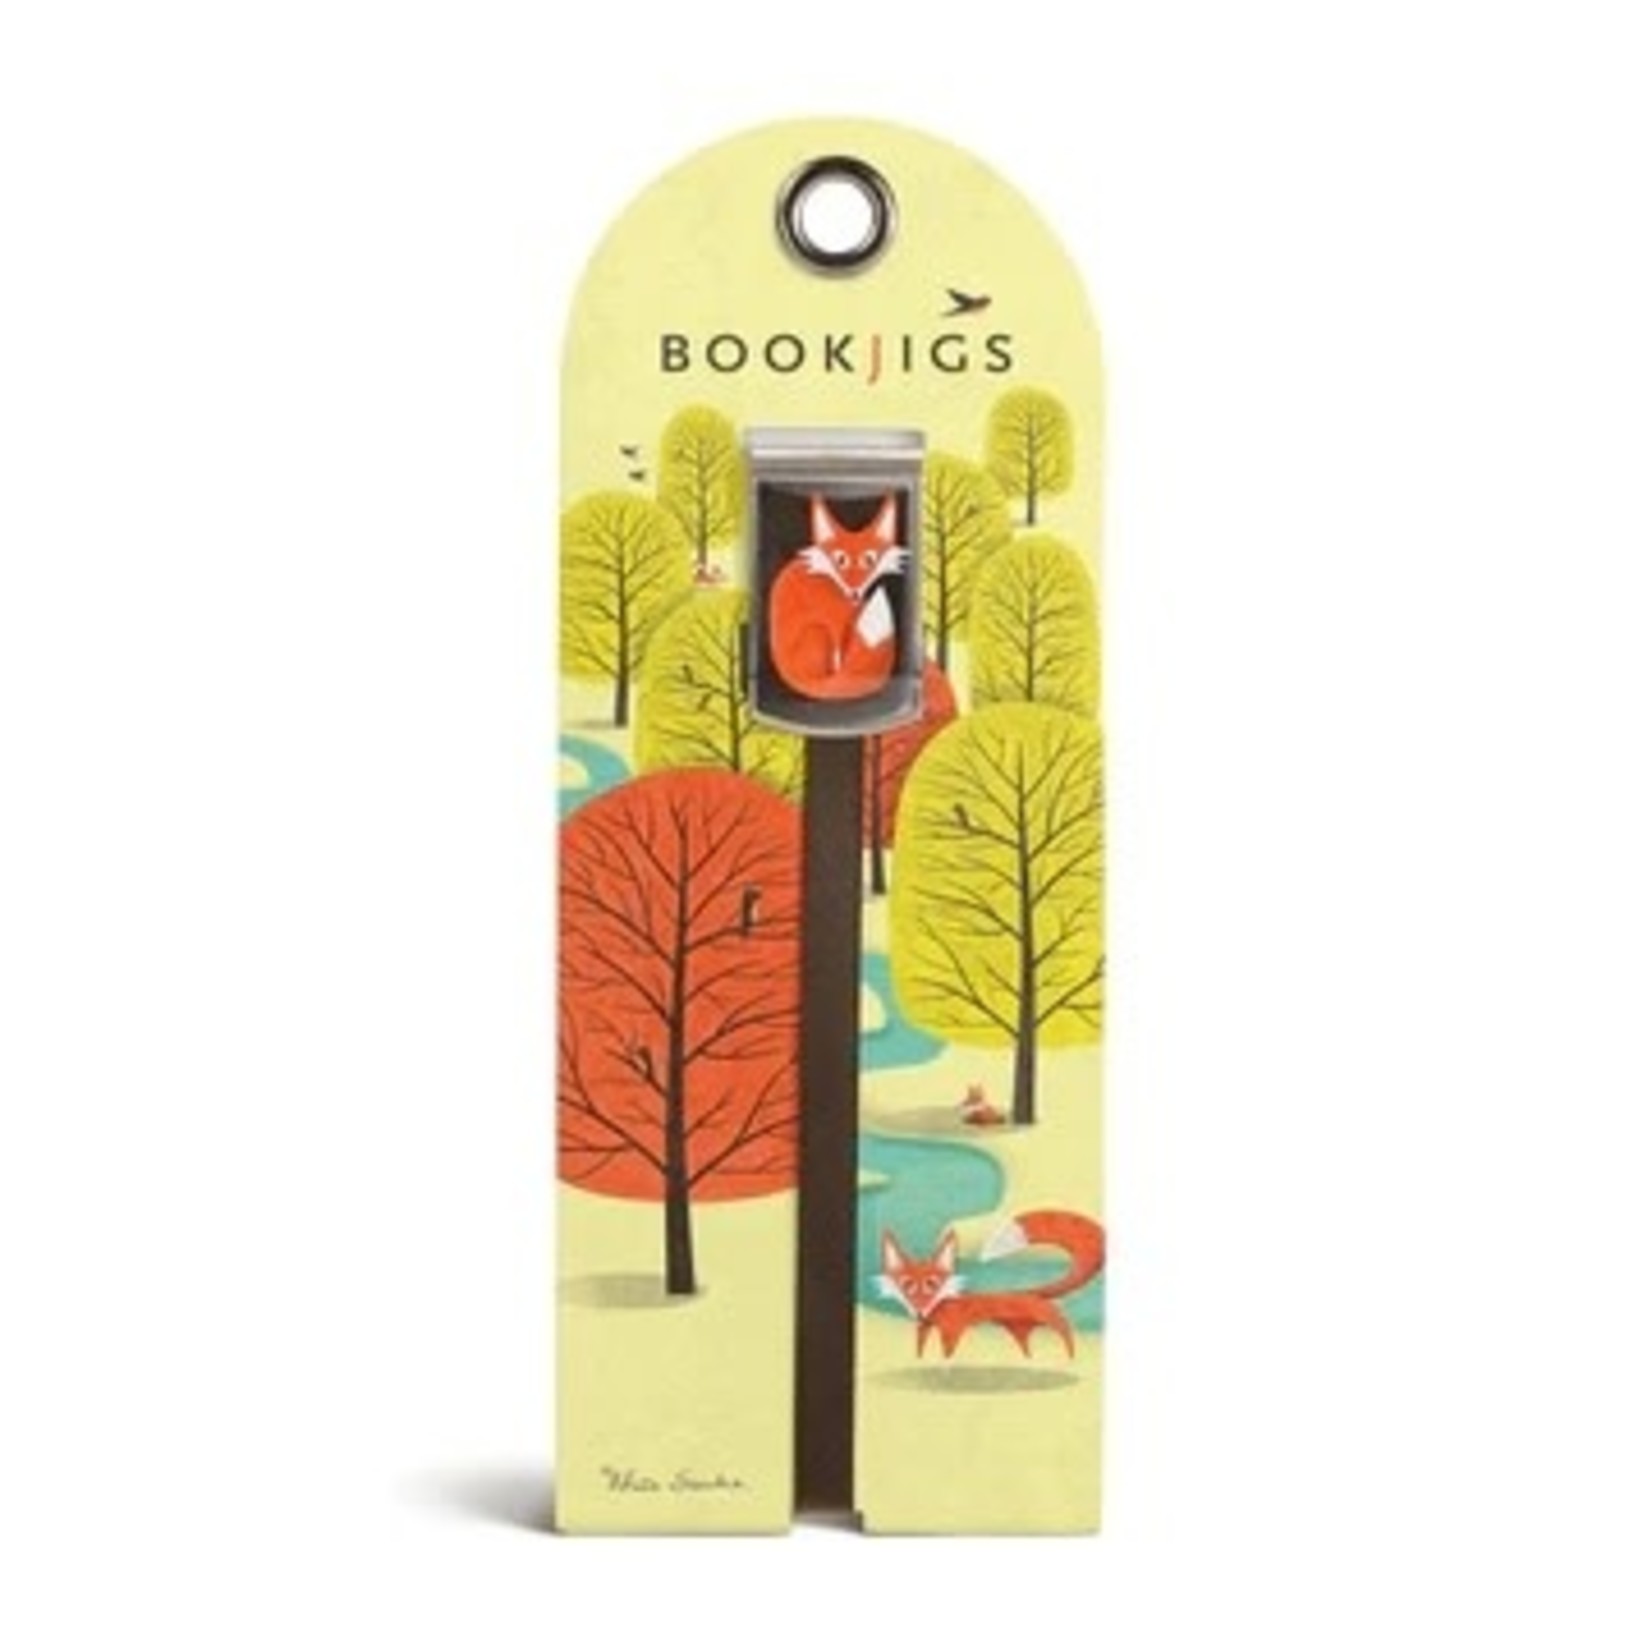 Bookjigs Bookmark - White Socks (Fox)